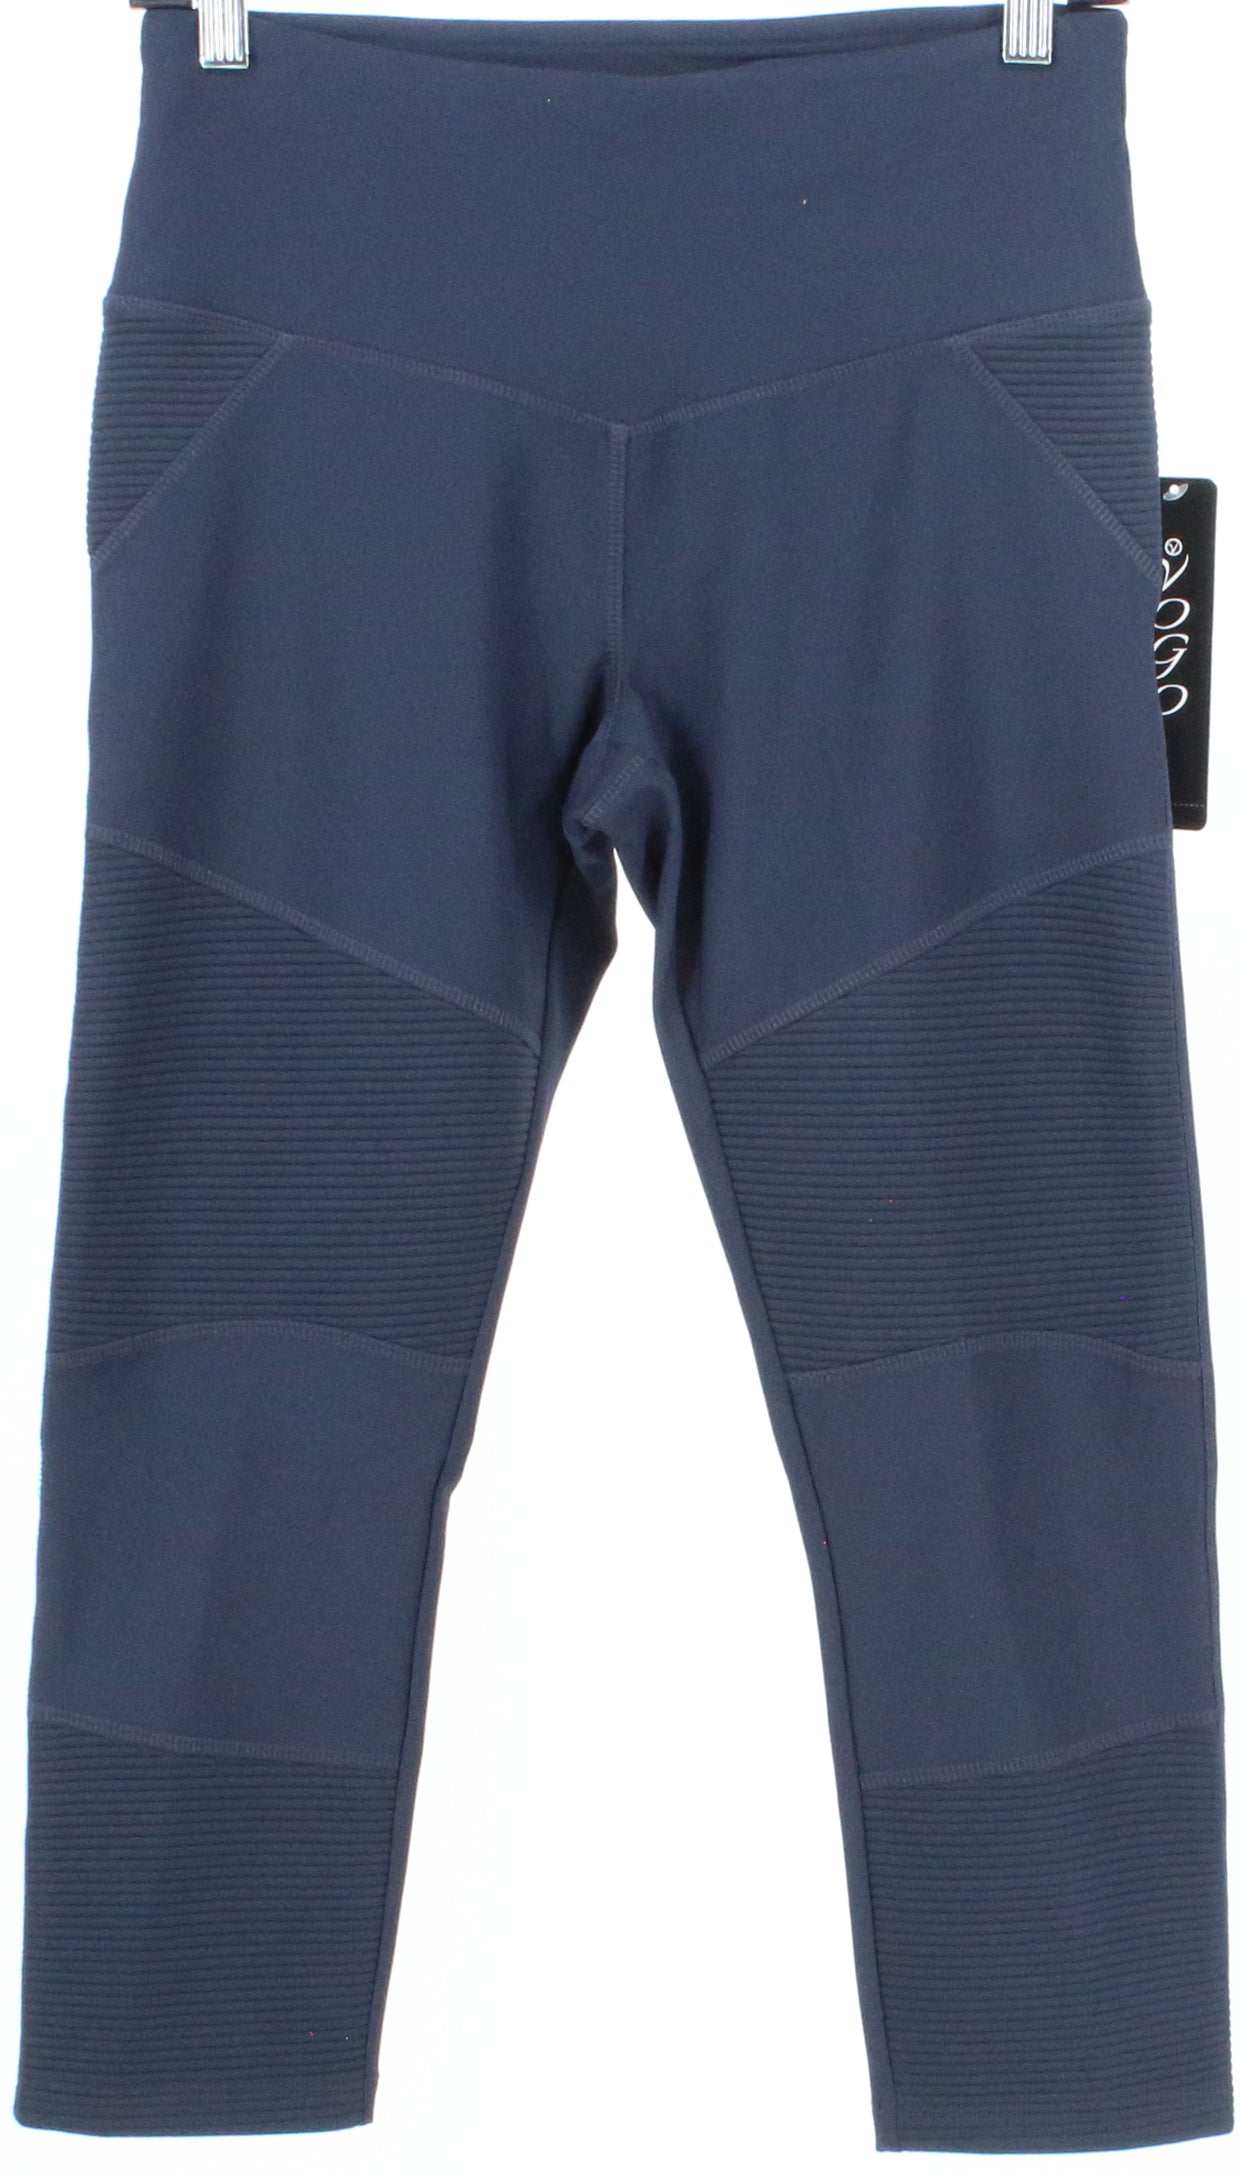 Shop Vogo Athletica Navy Blue Legging Pants